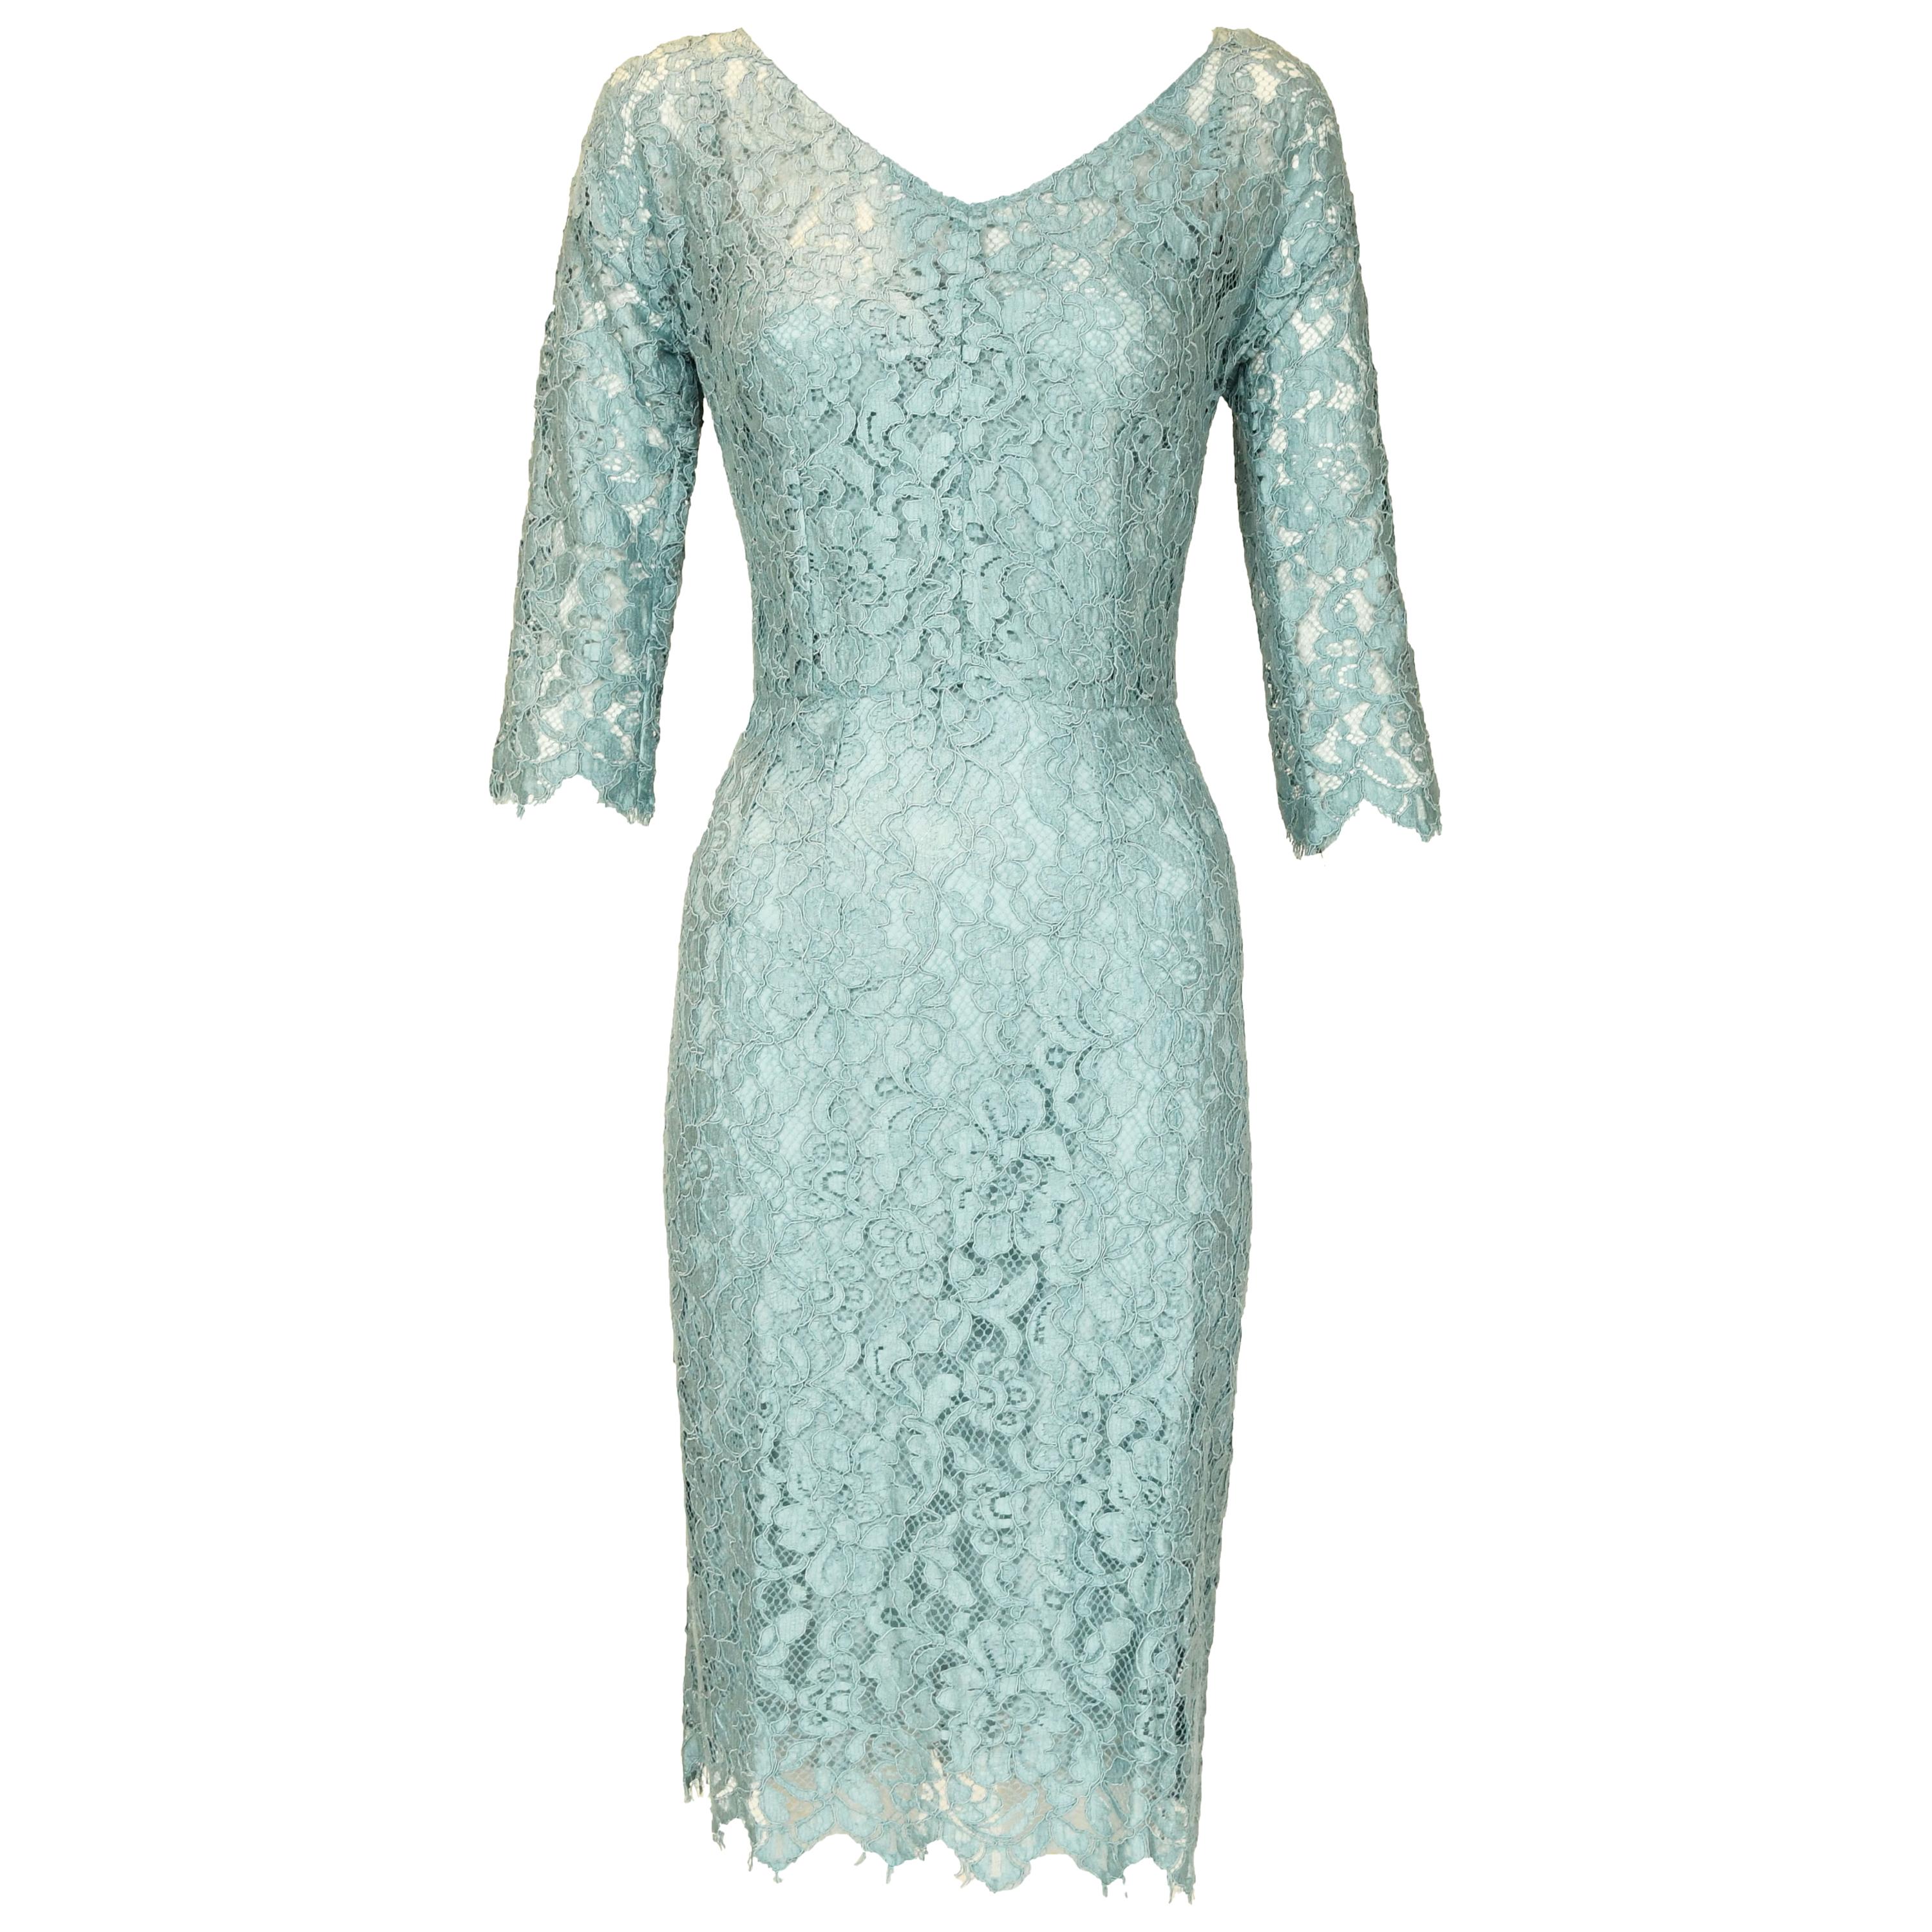 Dolce & Gabbana Light Blue Lace Sheath Dress - Size IT 40